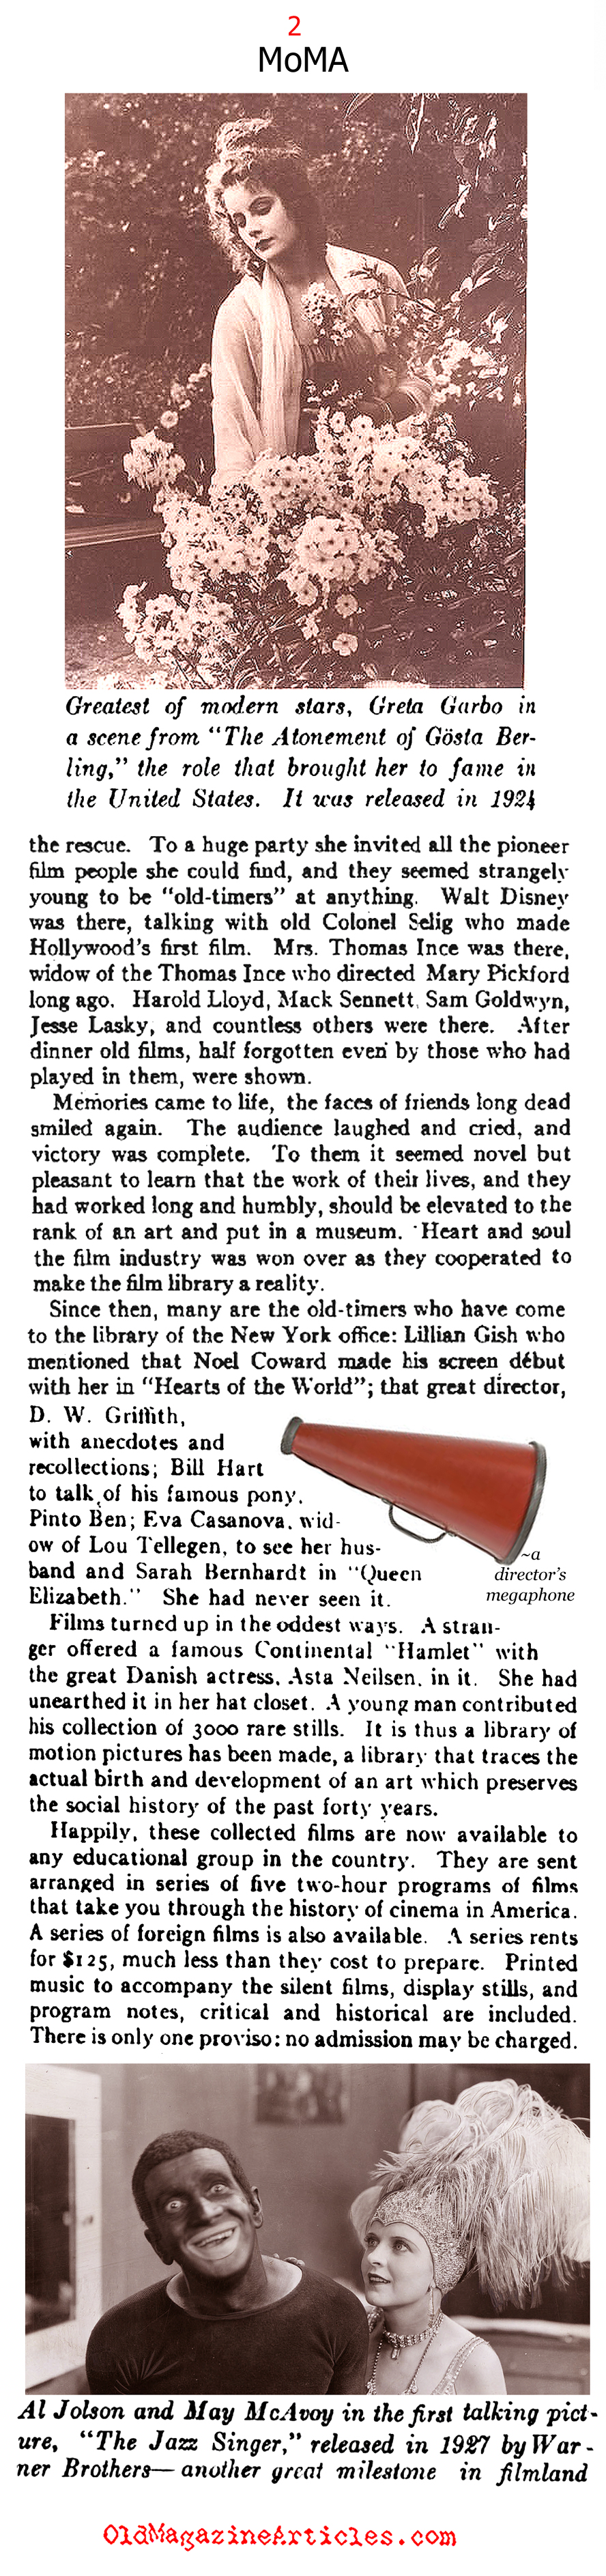 Silent Film Library Established (Delineator Magazine, 1937)